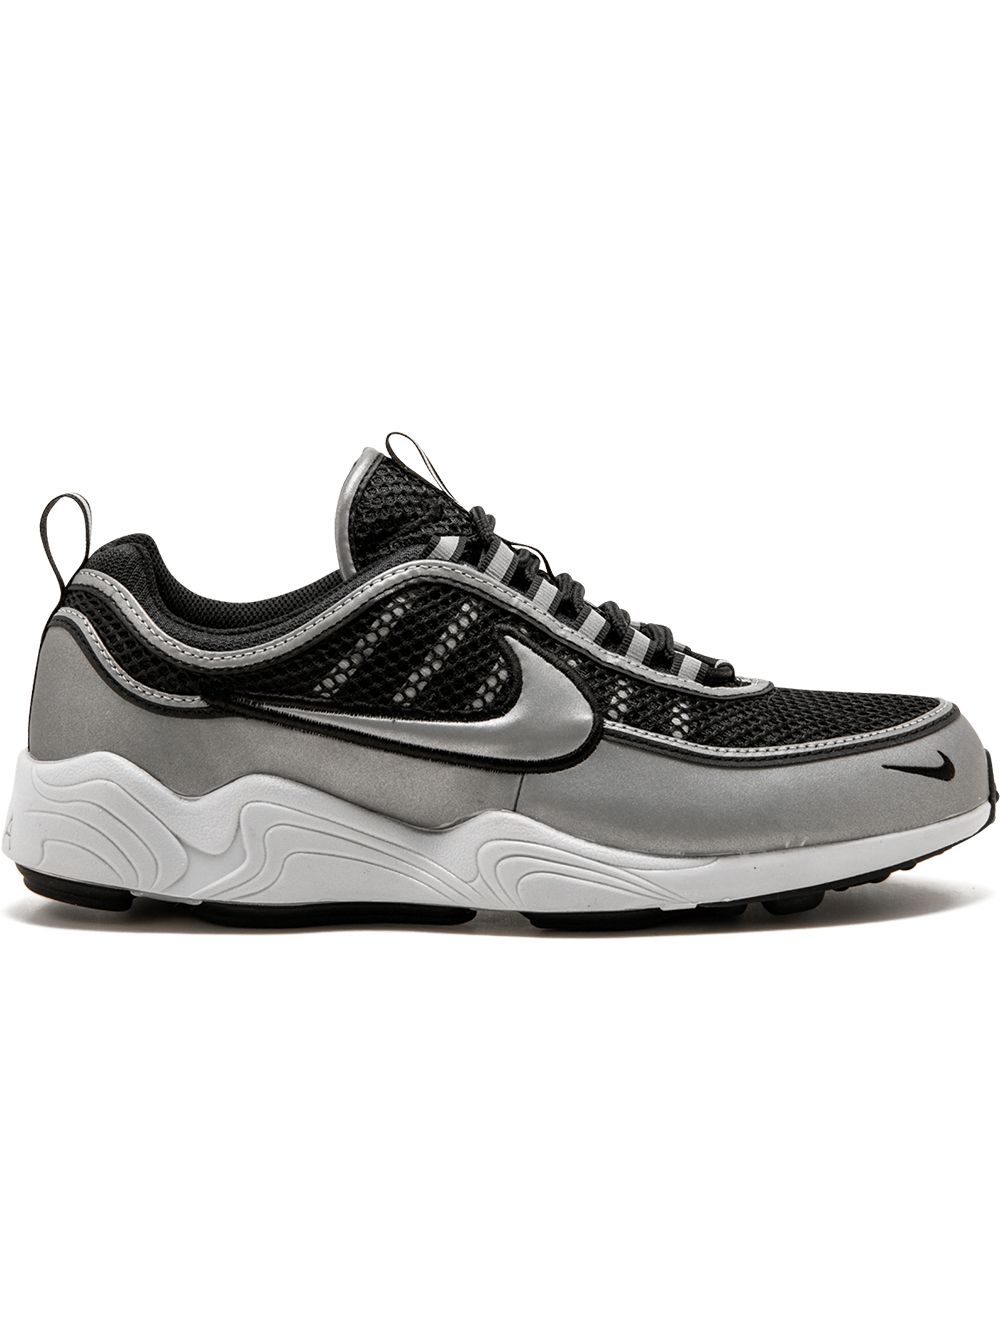 Nike Air Zoom Spiridon '16 "Black/Metallic Silver" sneakers von Nike